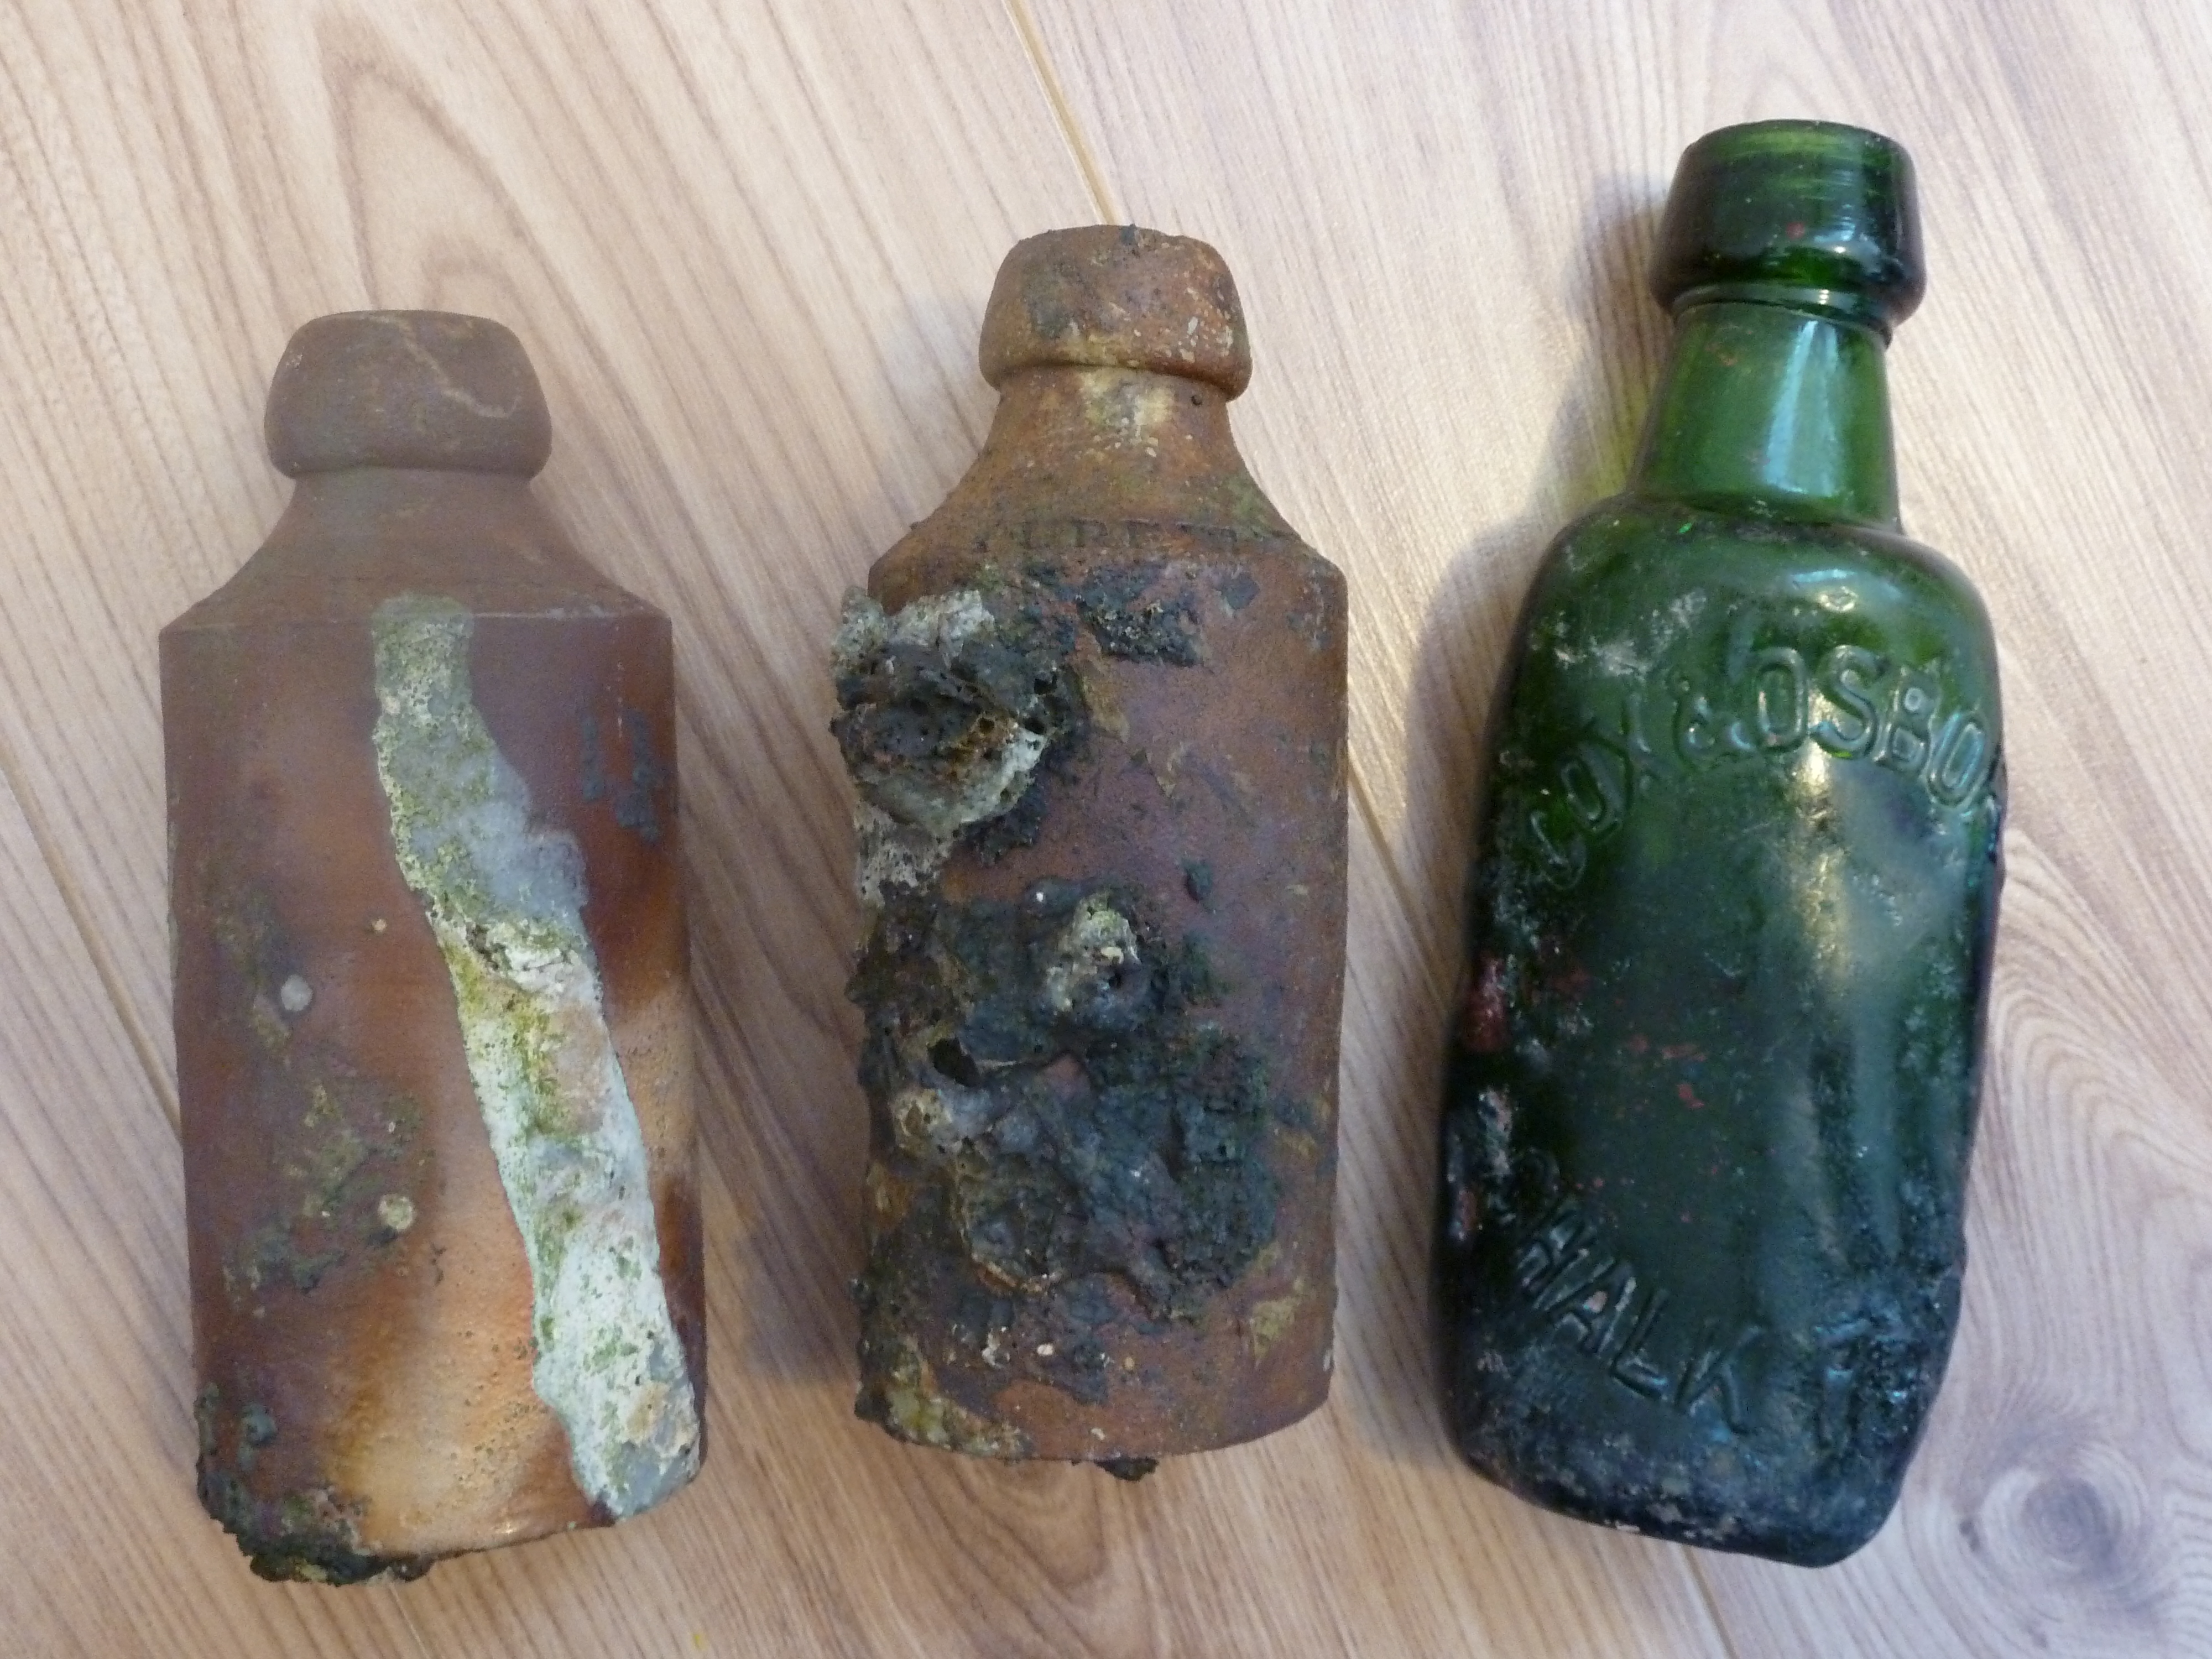 Bottles from a Destructor